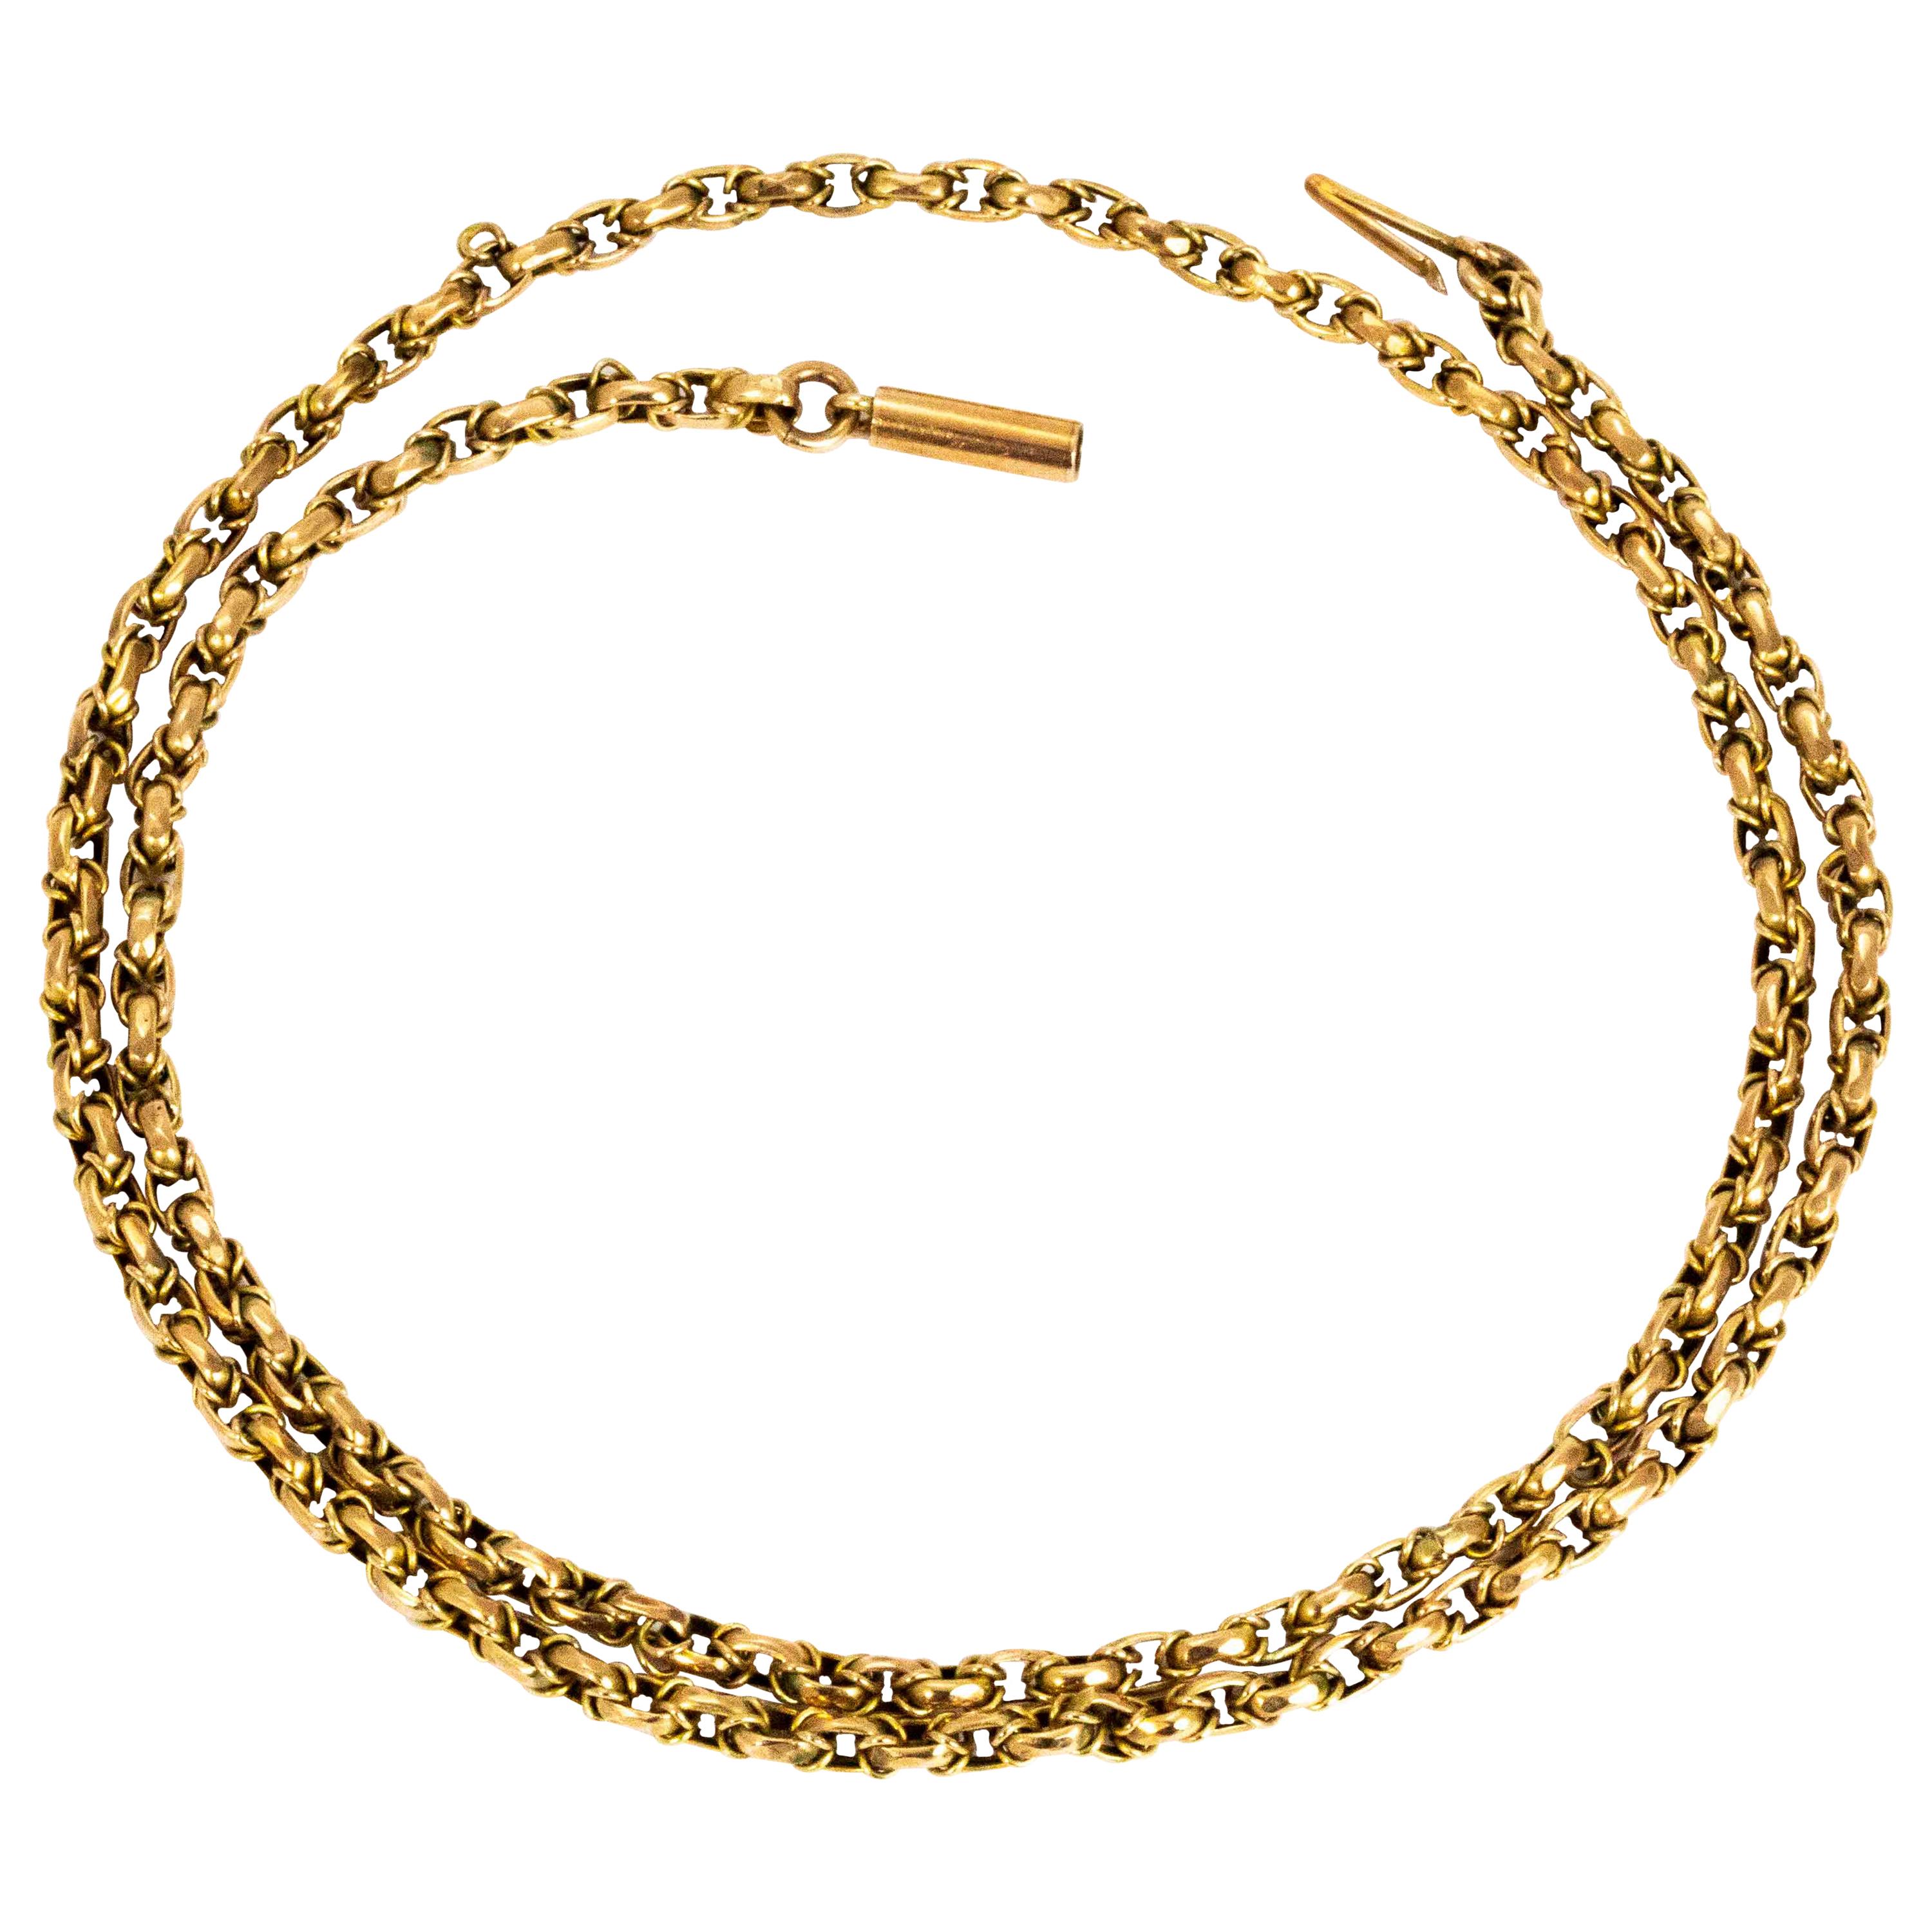 Victorian 9 Carat Gold Belcher Link Chain Necklace